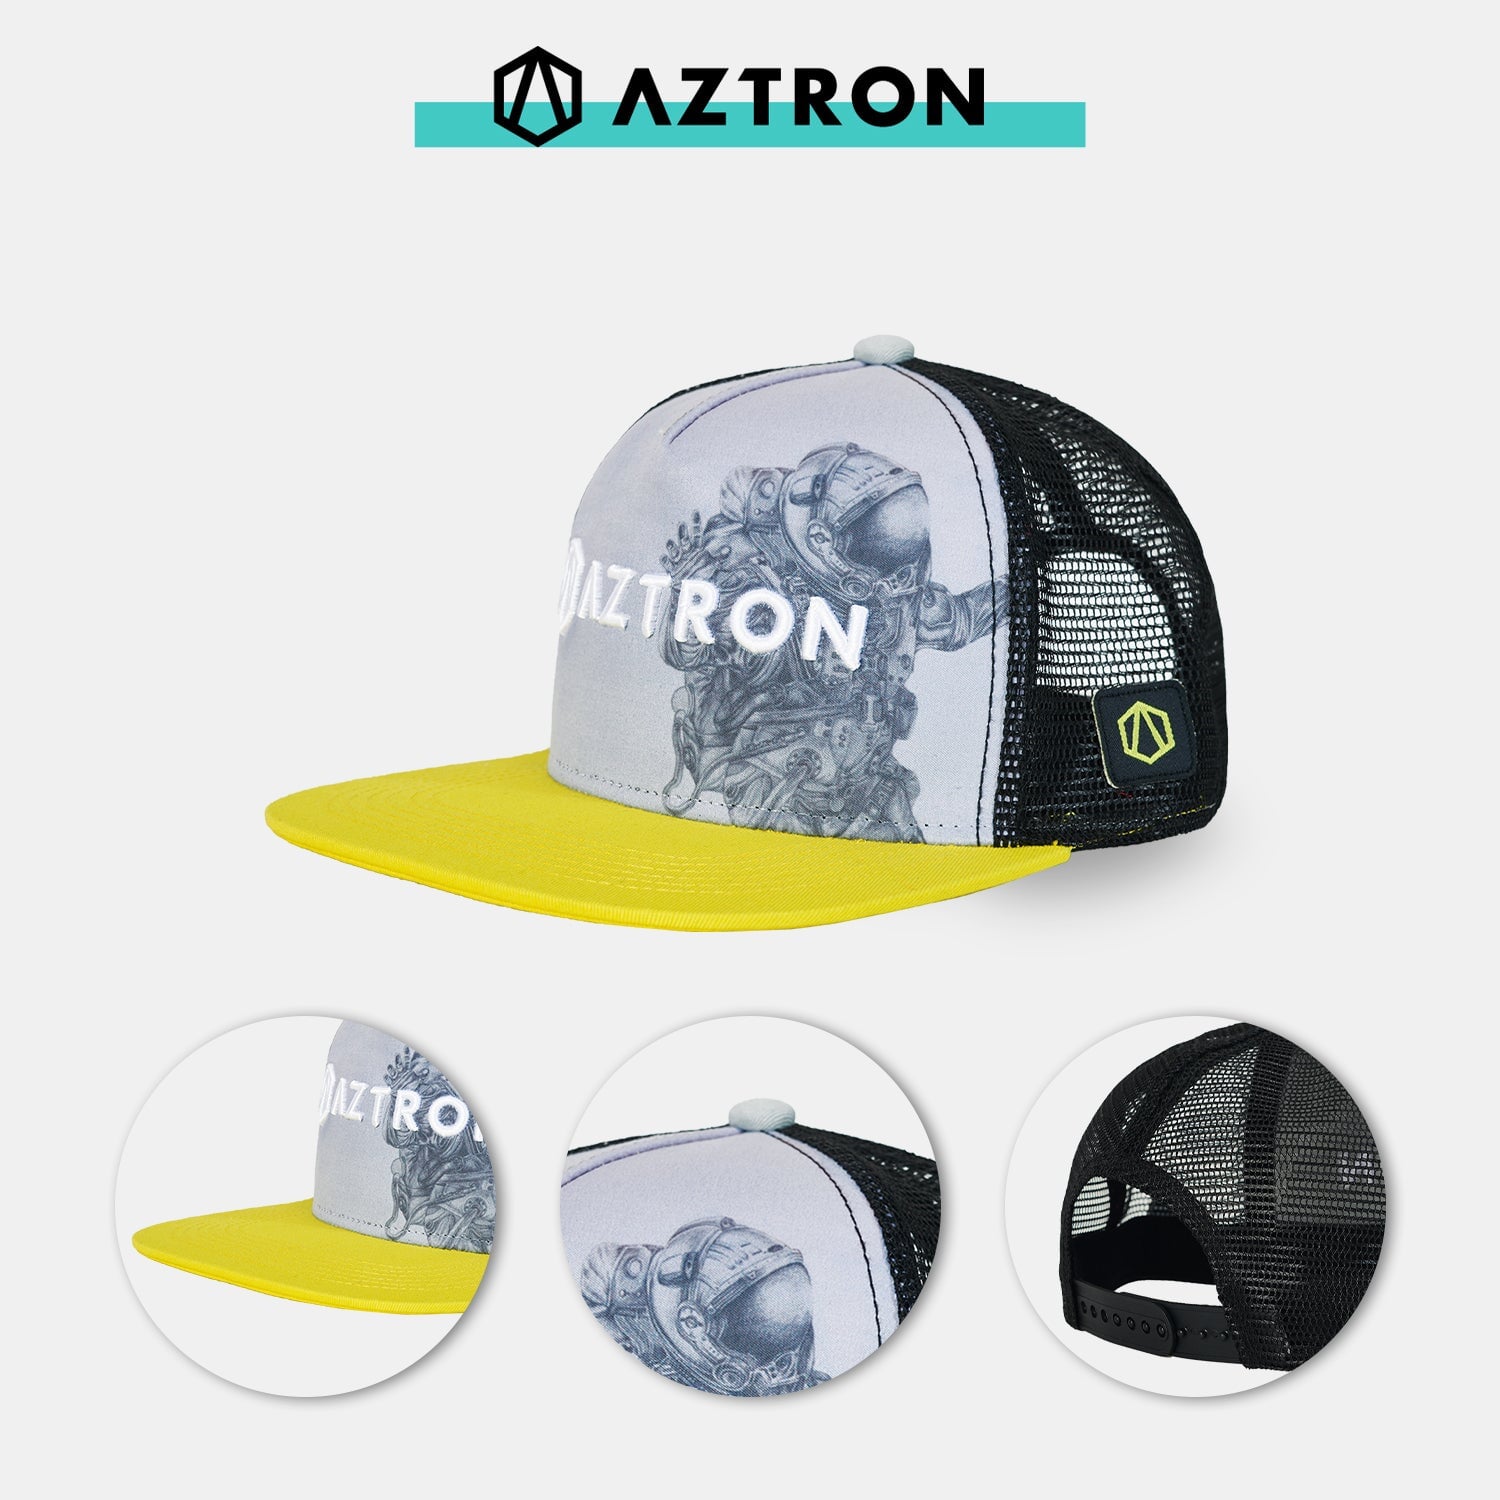 AZTRON Aztronaut Cap, Kappe, Baseball Cap, SUP Cap, Trucker Cap